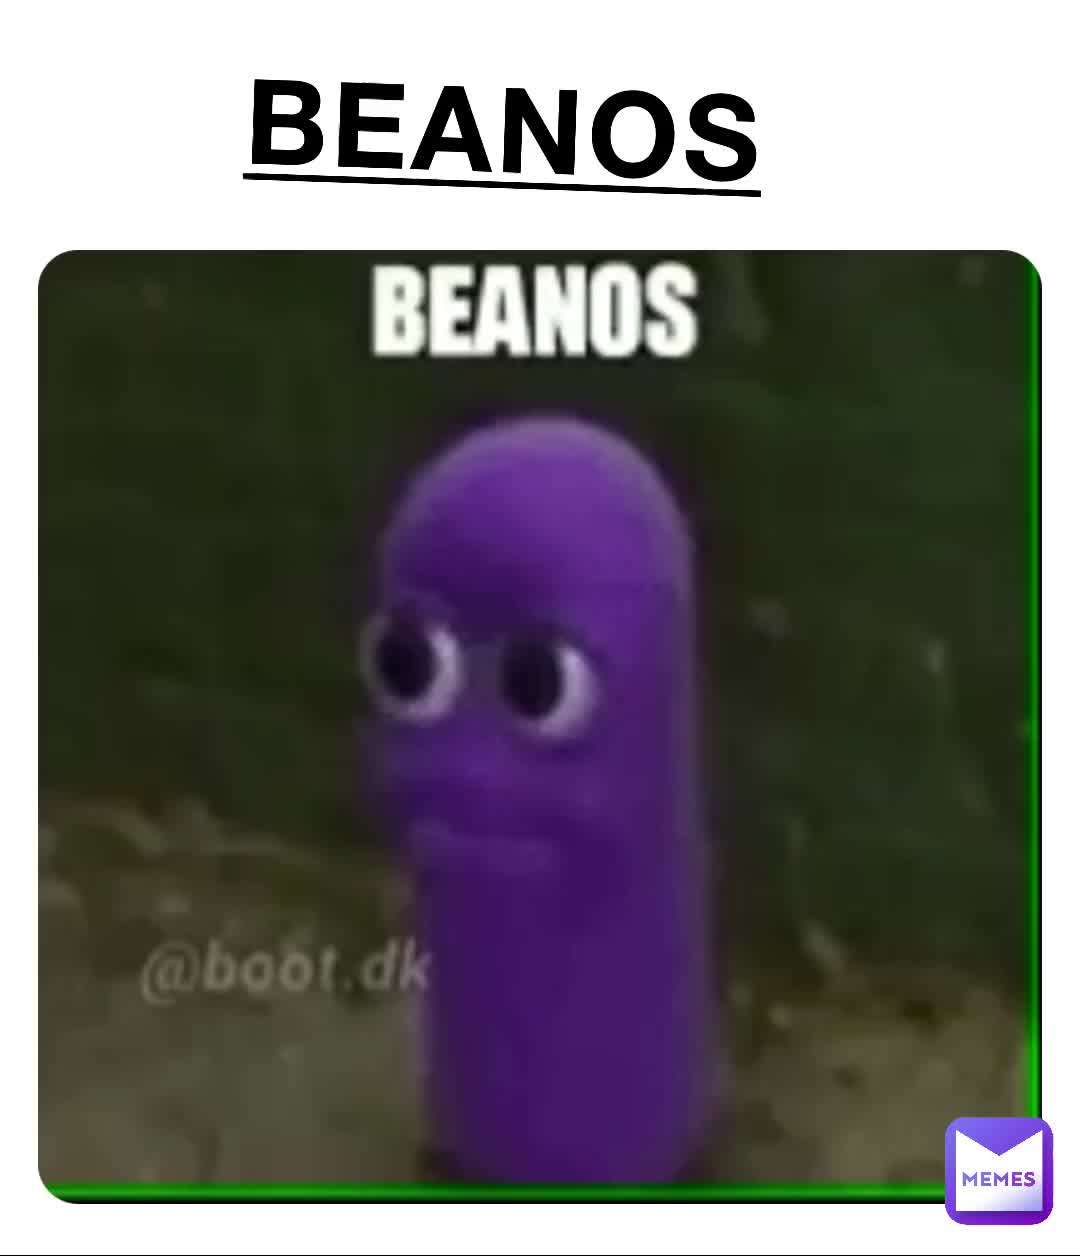 Beanos